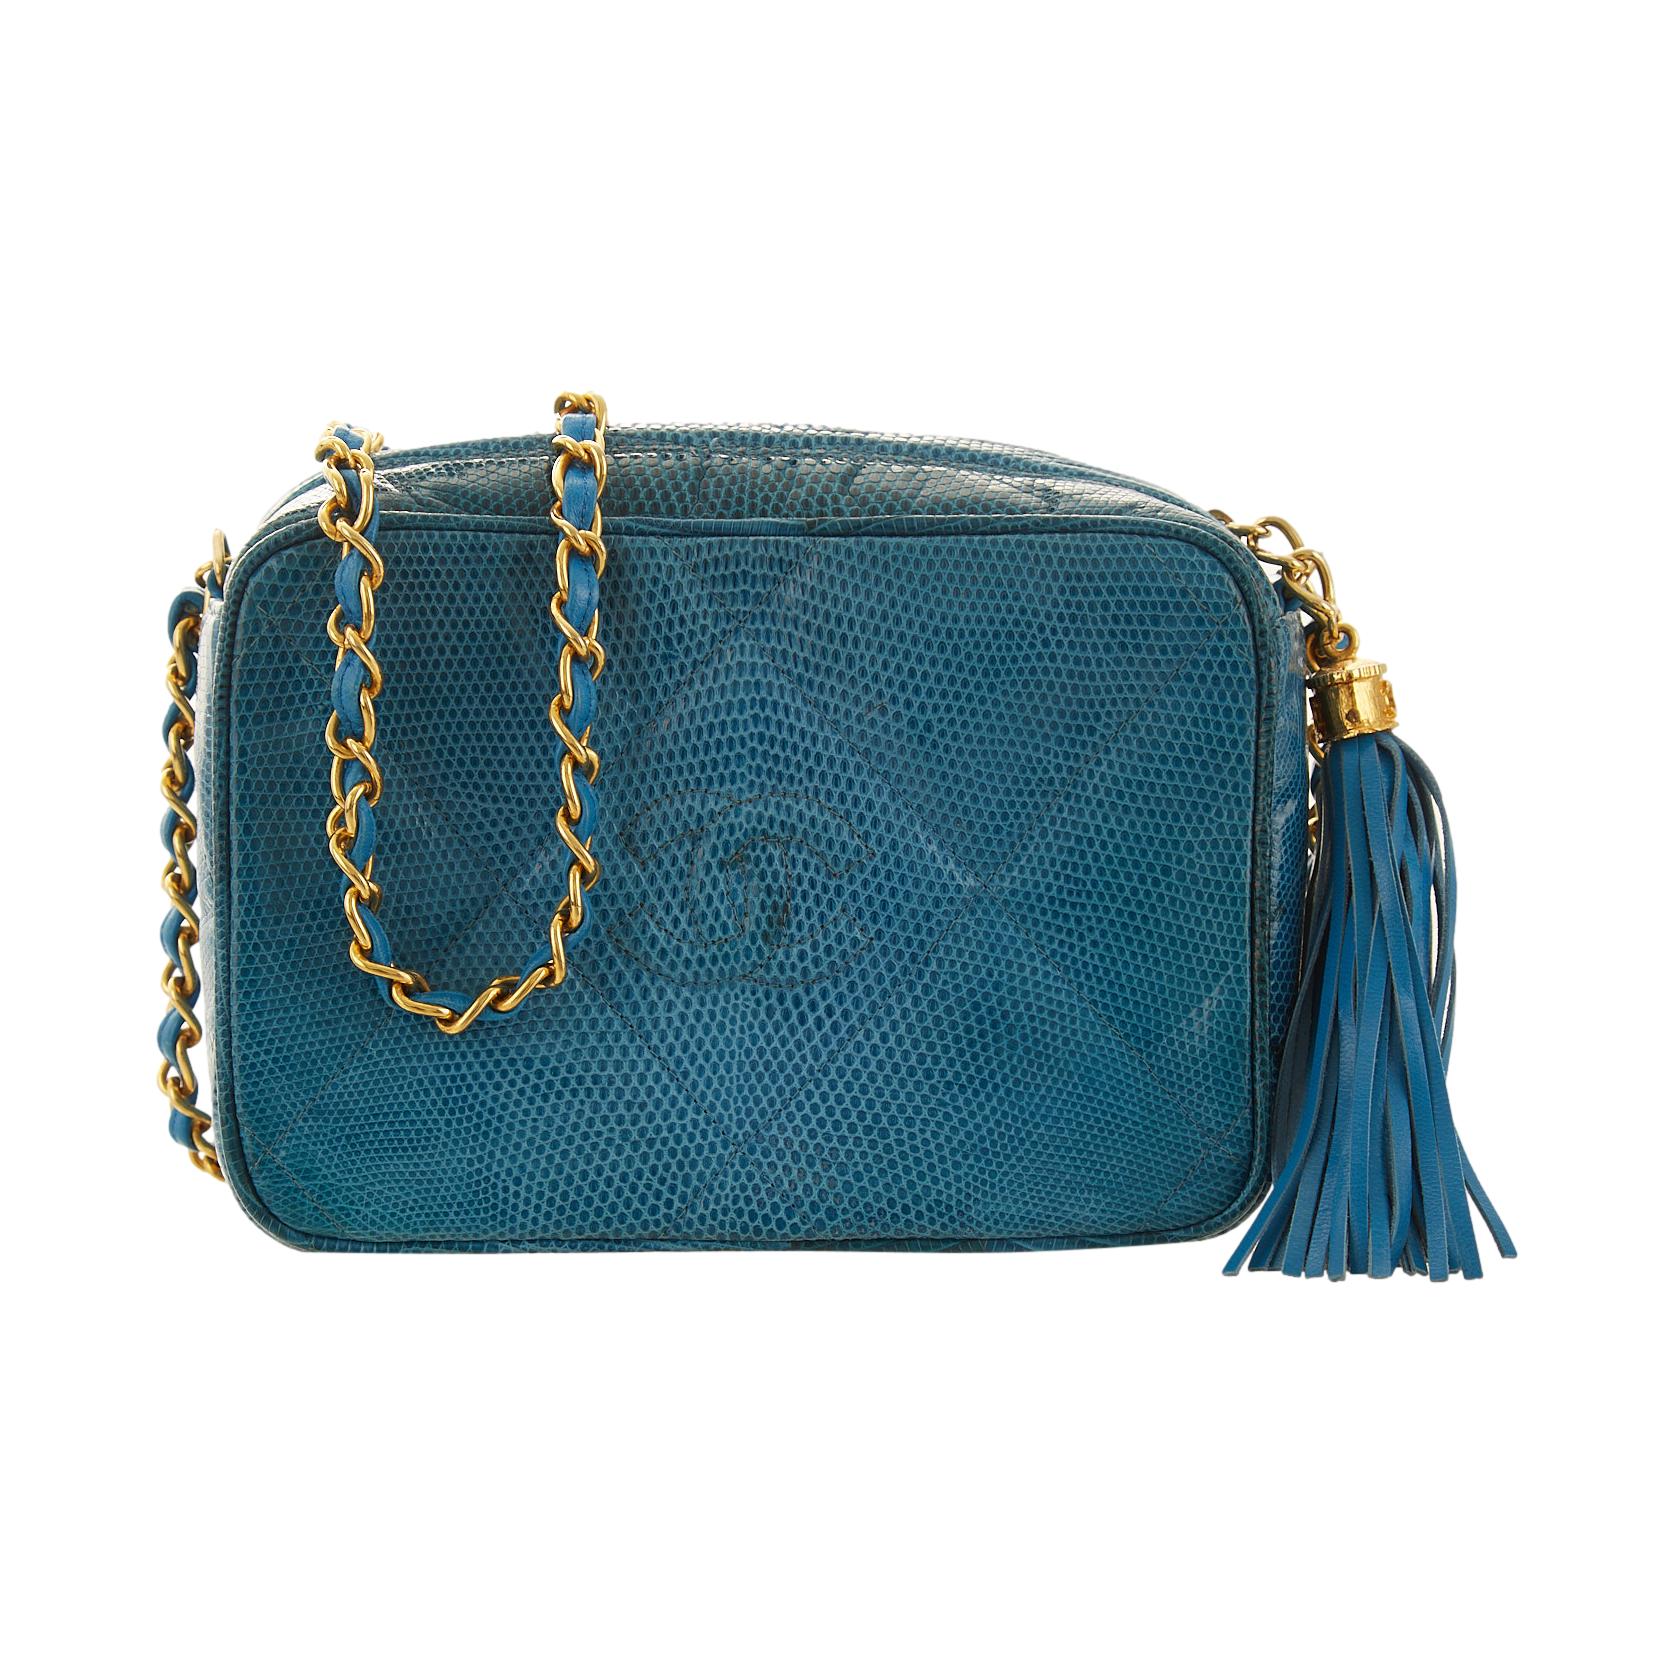 Chanel Bright Blue Lizard Tassel Bag